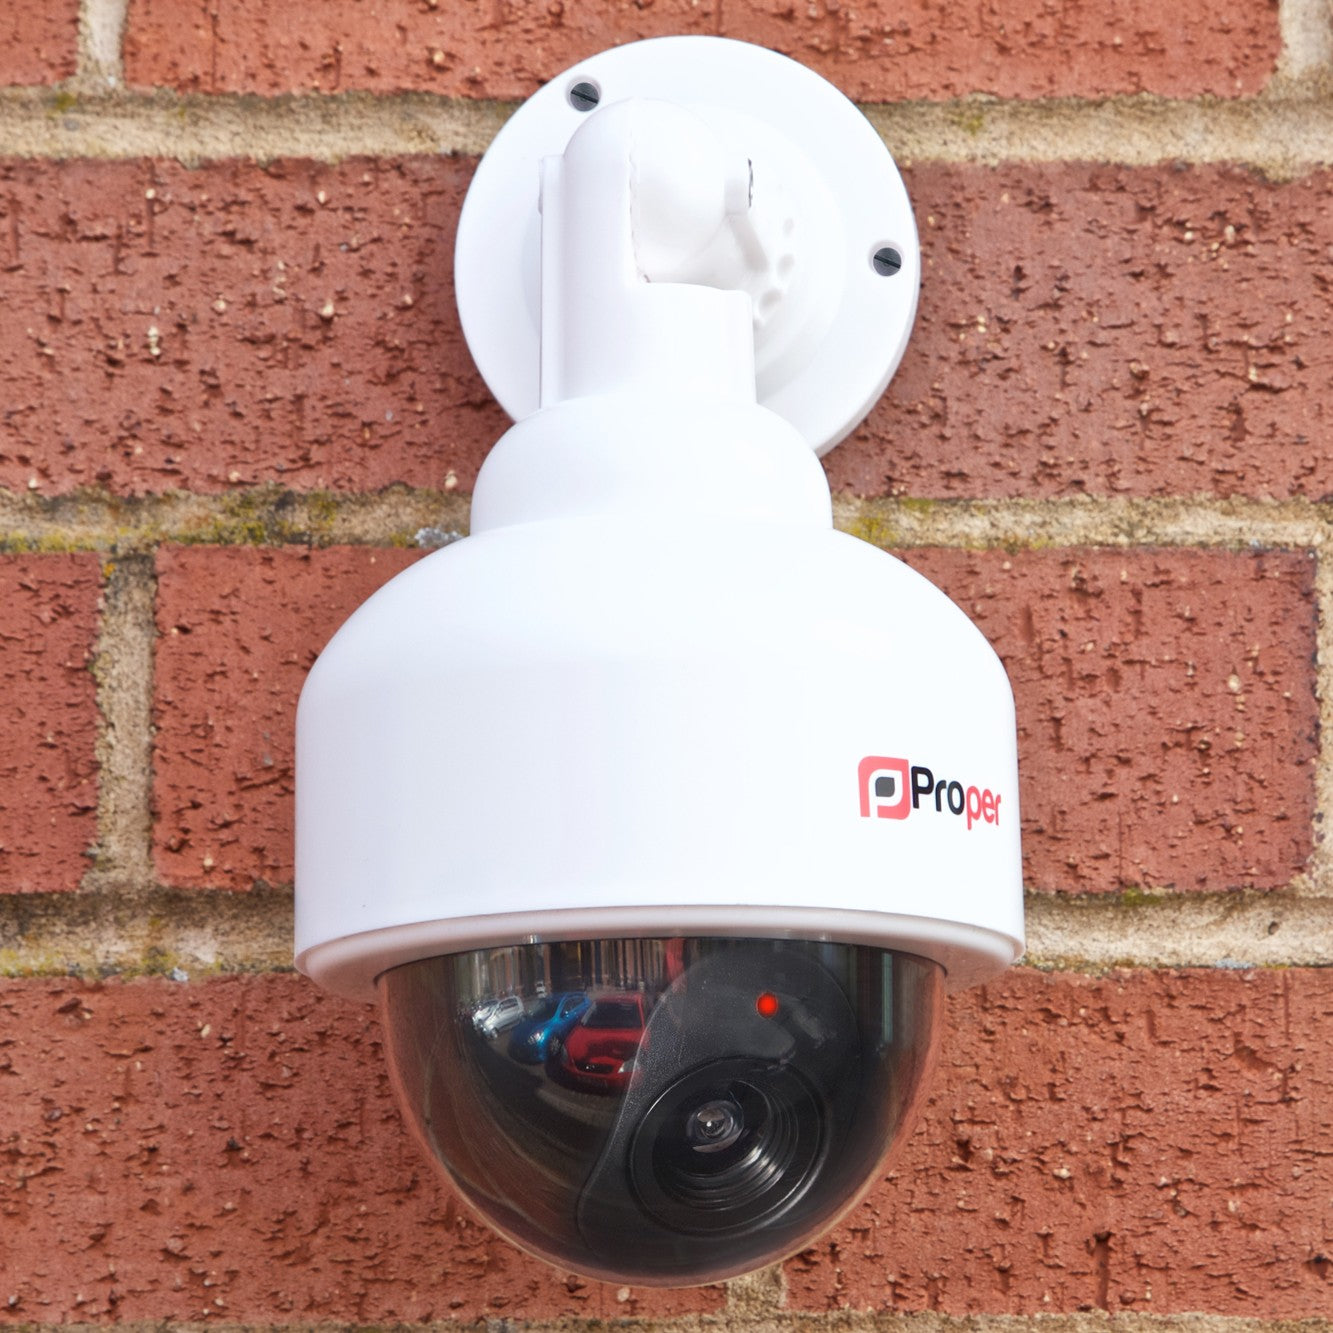 ProperAV Replica Security Speed Dome Camera with Flashing Light - White - maplin.co.uk